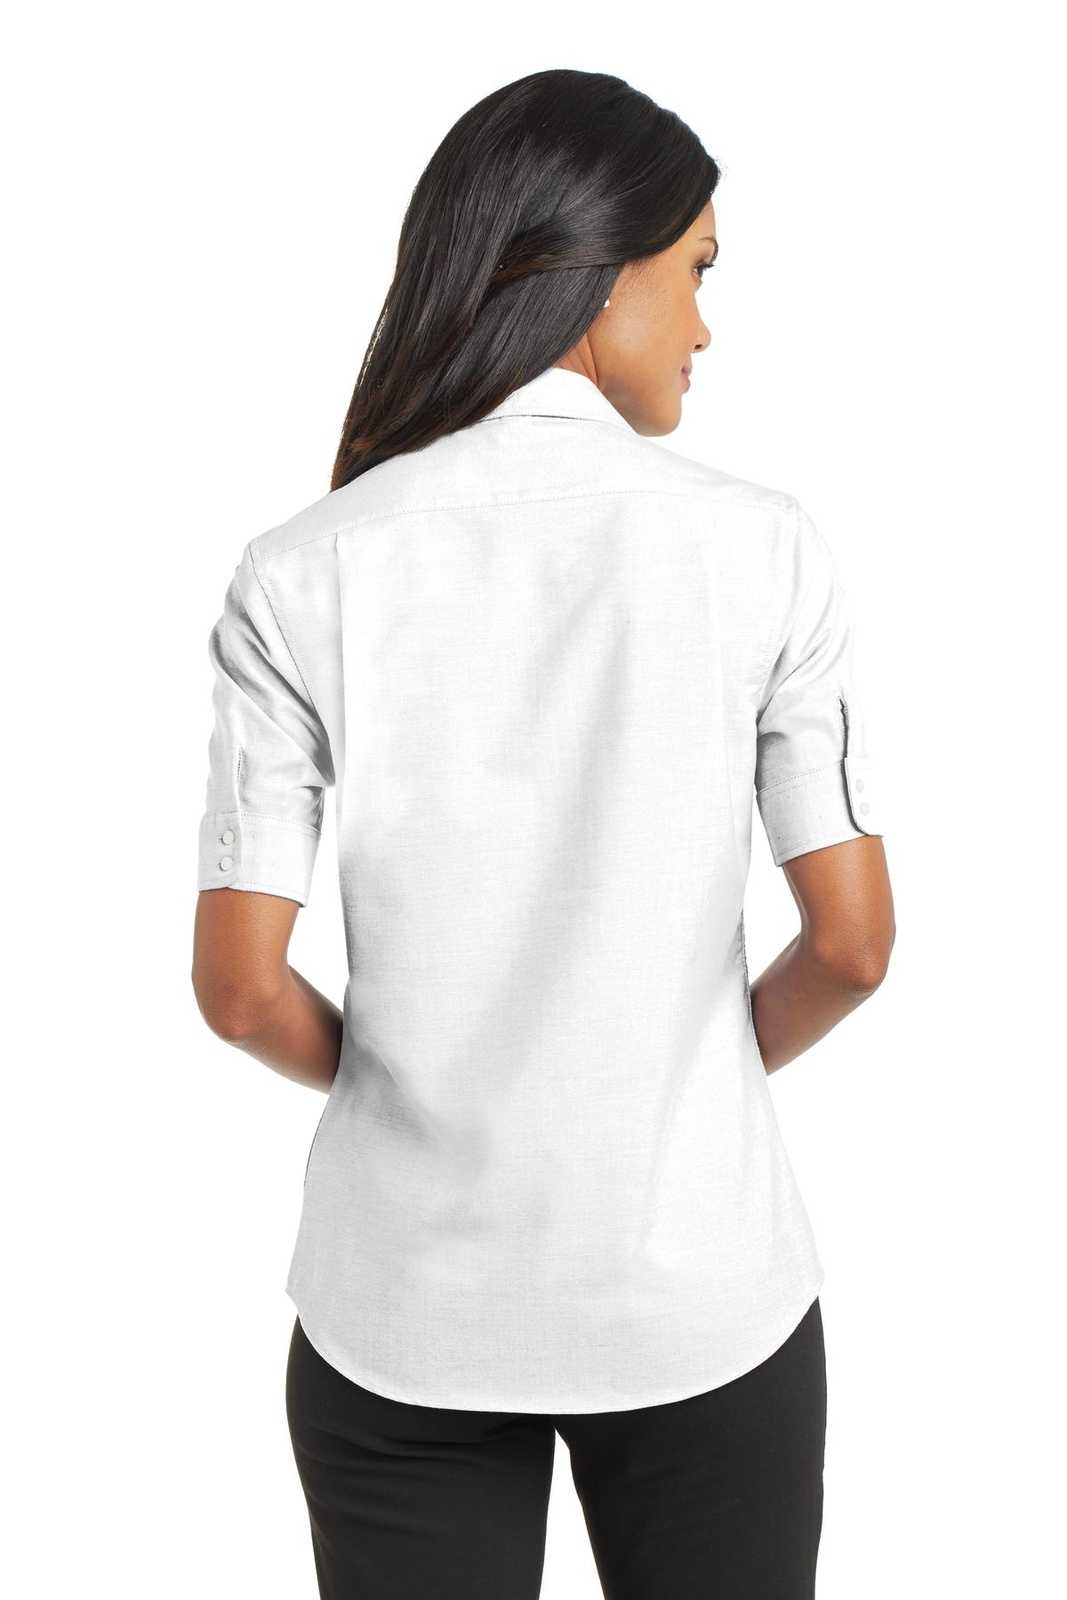 Port Authority L659 Ladies Short Sleeve Superpro Oxford Shirt - White - HIT a Double - 1